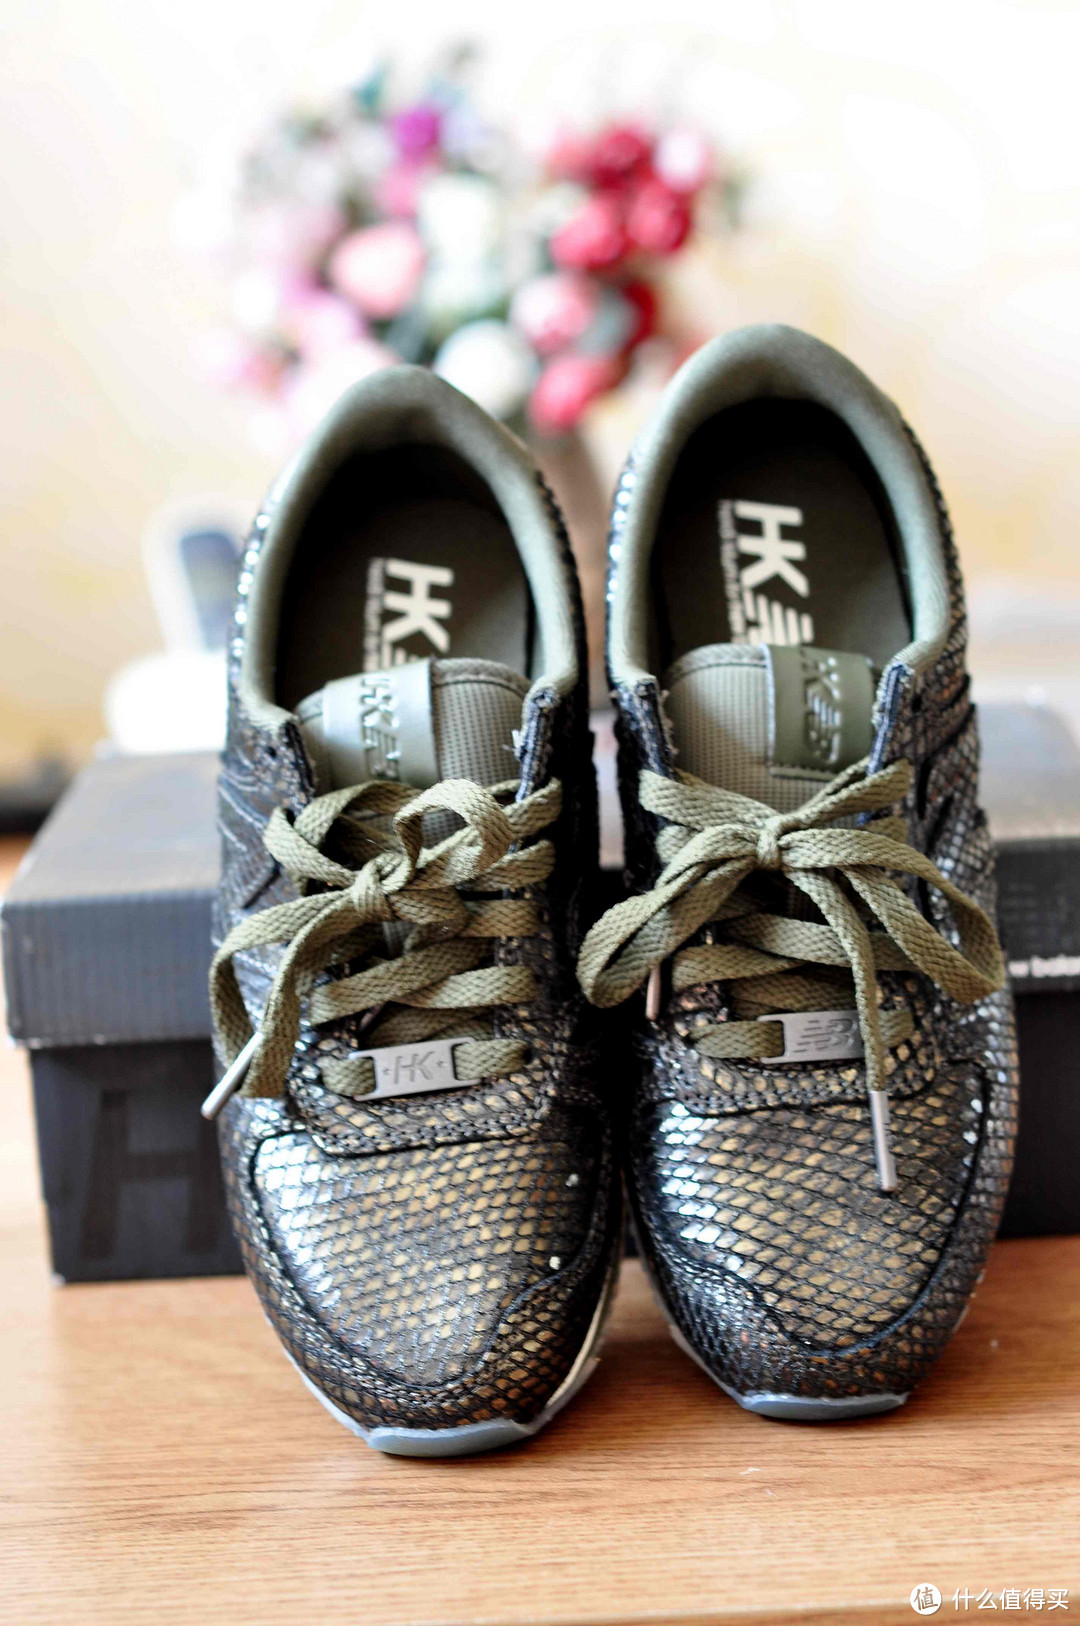 HKNB特别版 Heidi Klum for New Balance WL420 女款蛇皮纹运动鞋